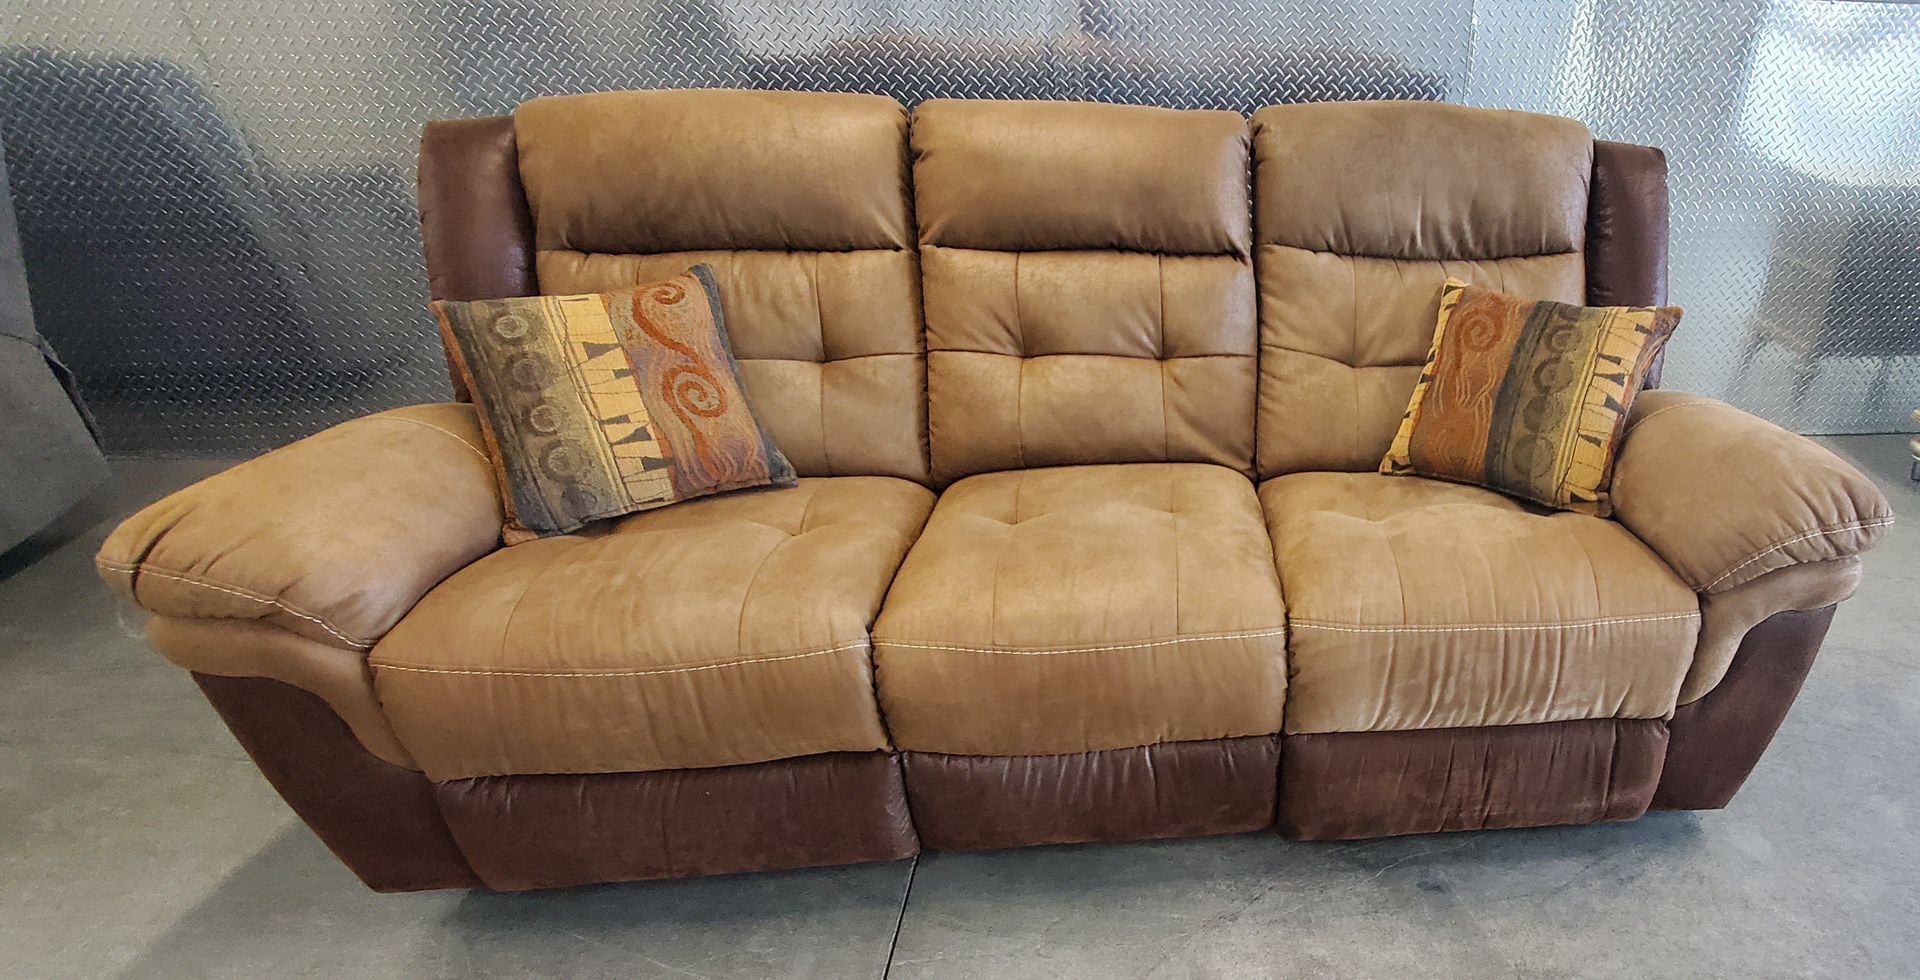 Beautiful Elegant Upscale Luxury Double Recliner Sofa